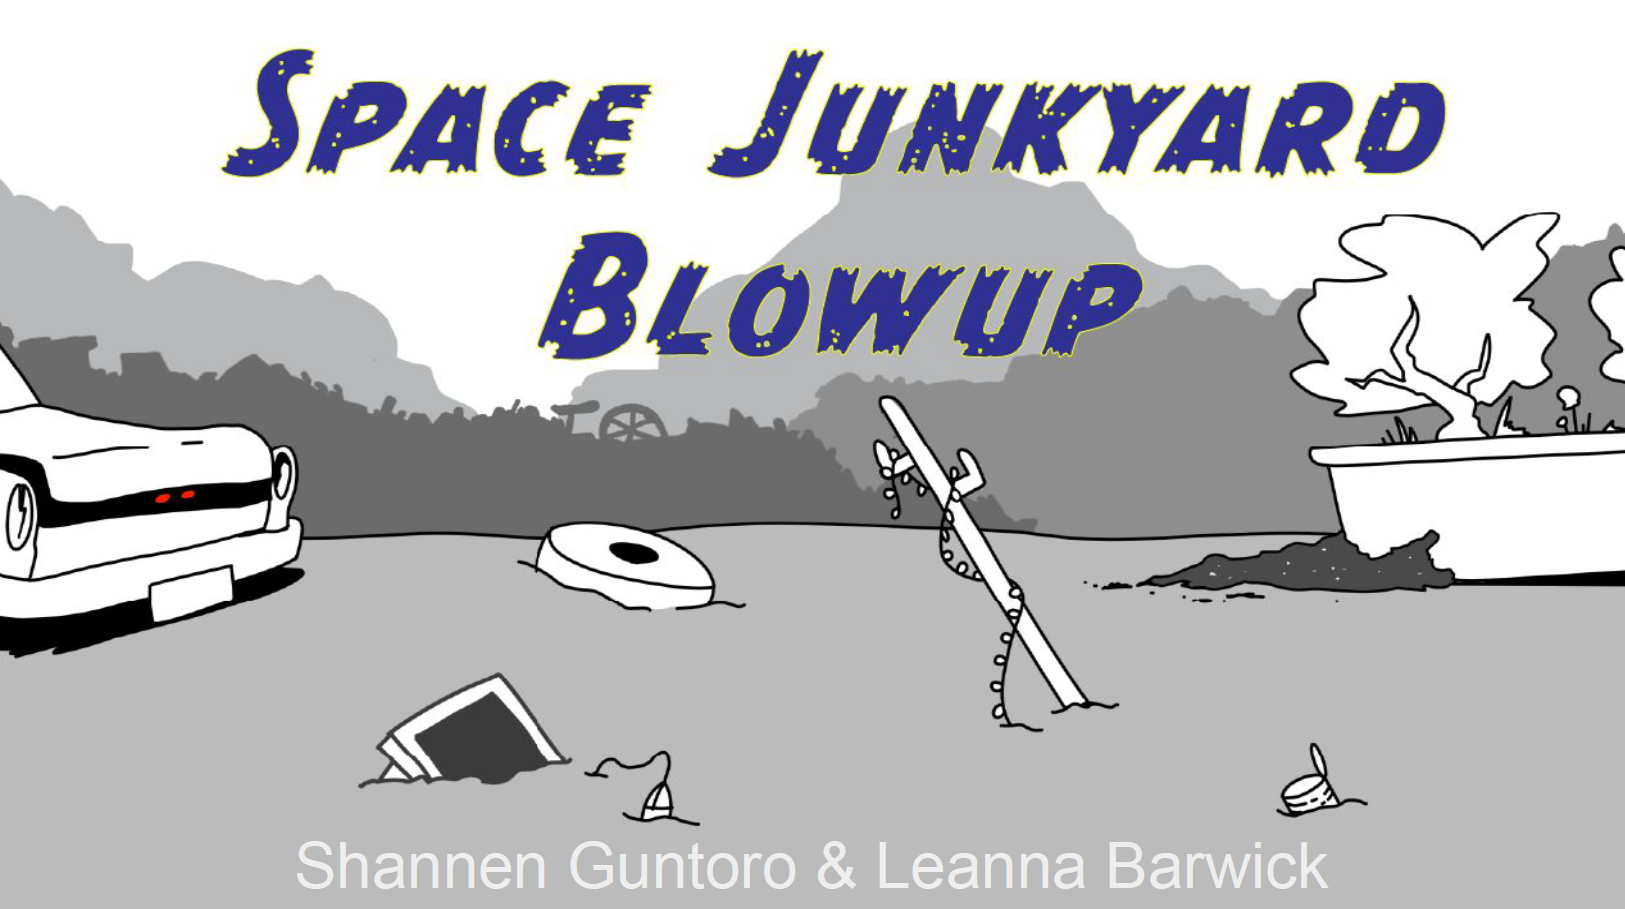 Space Junkyard Blowup